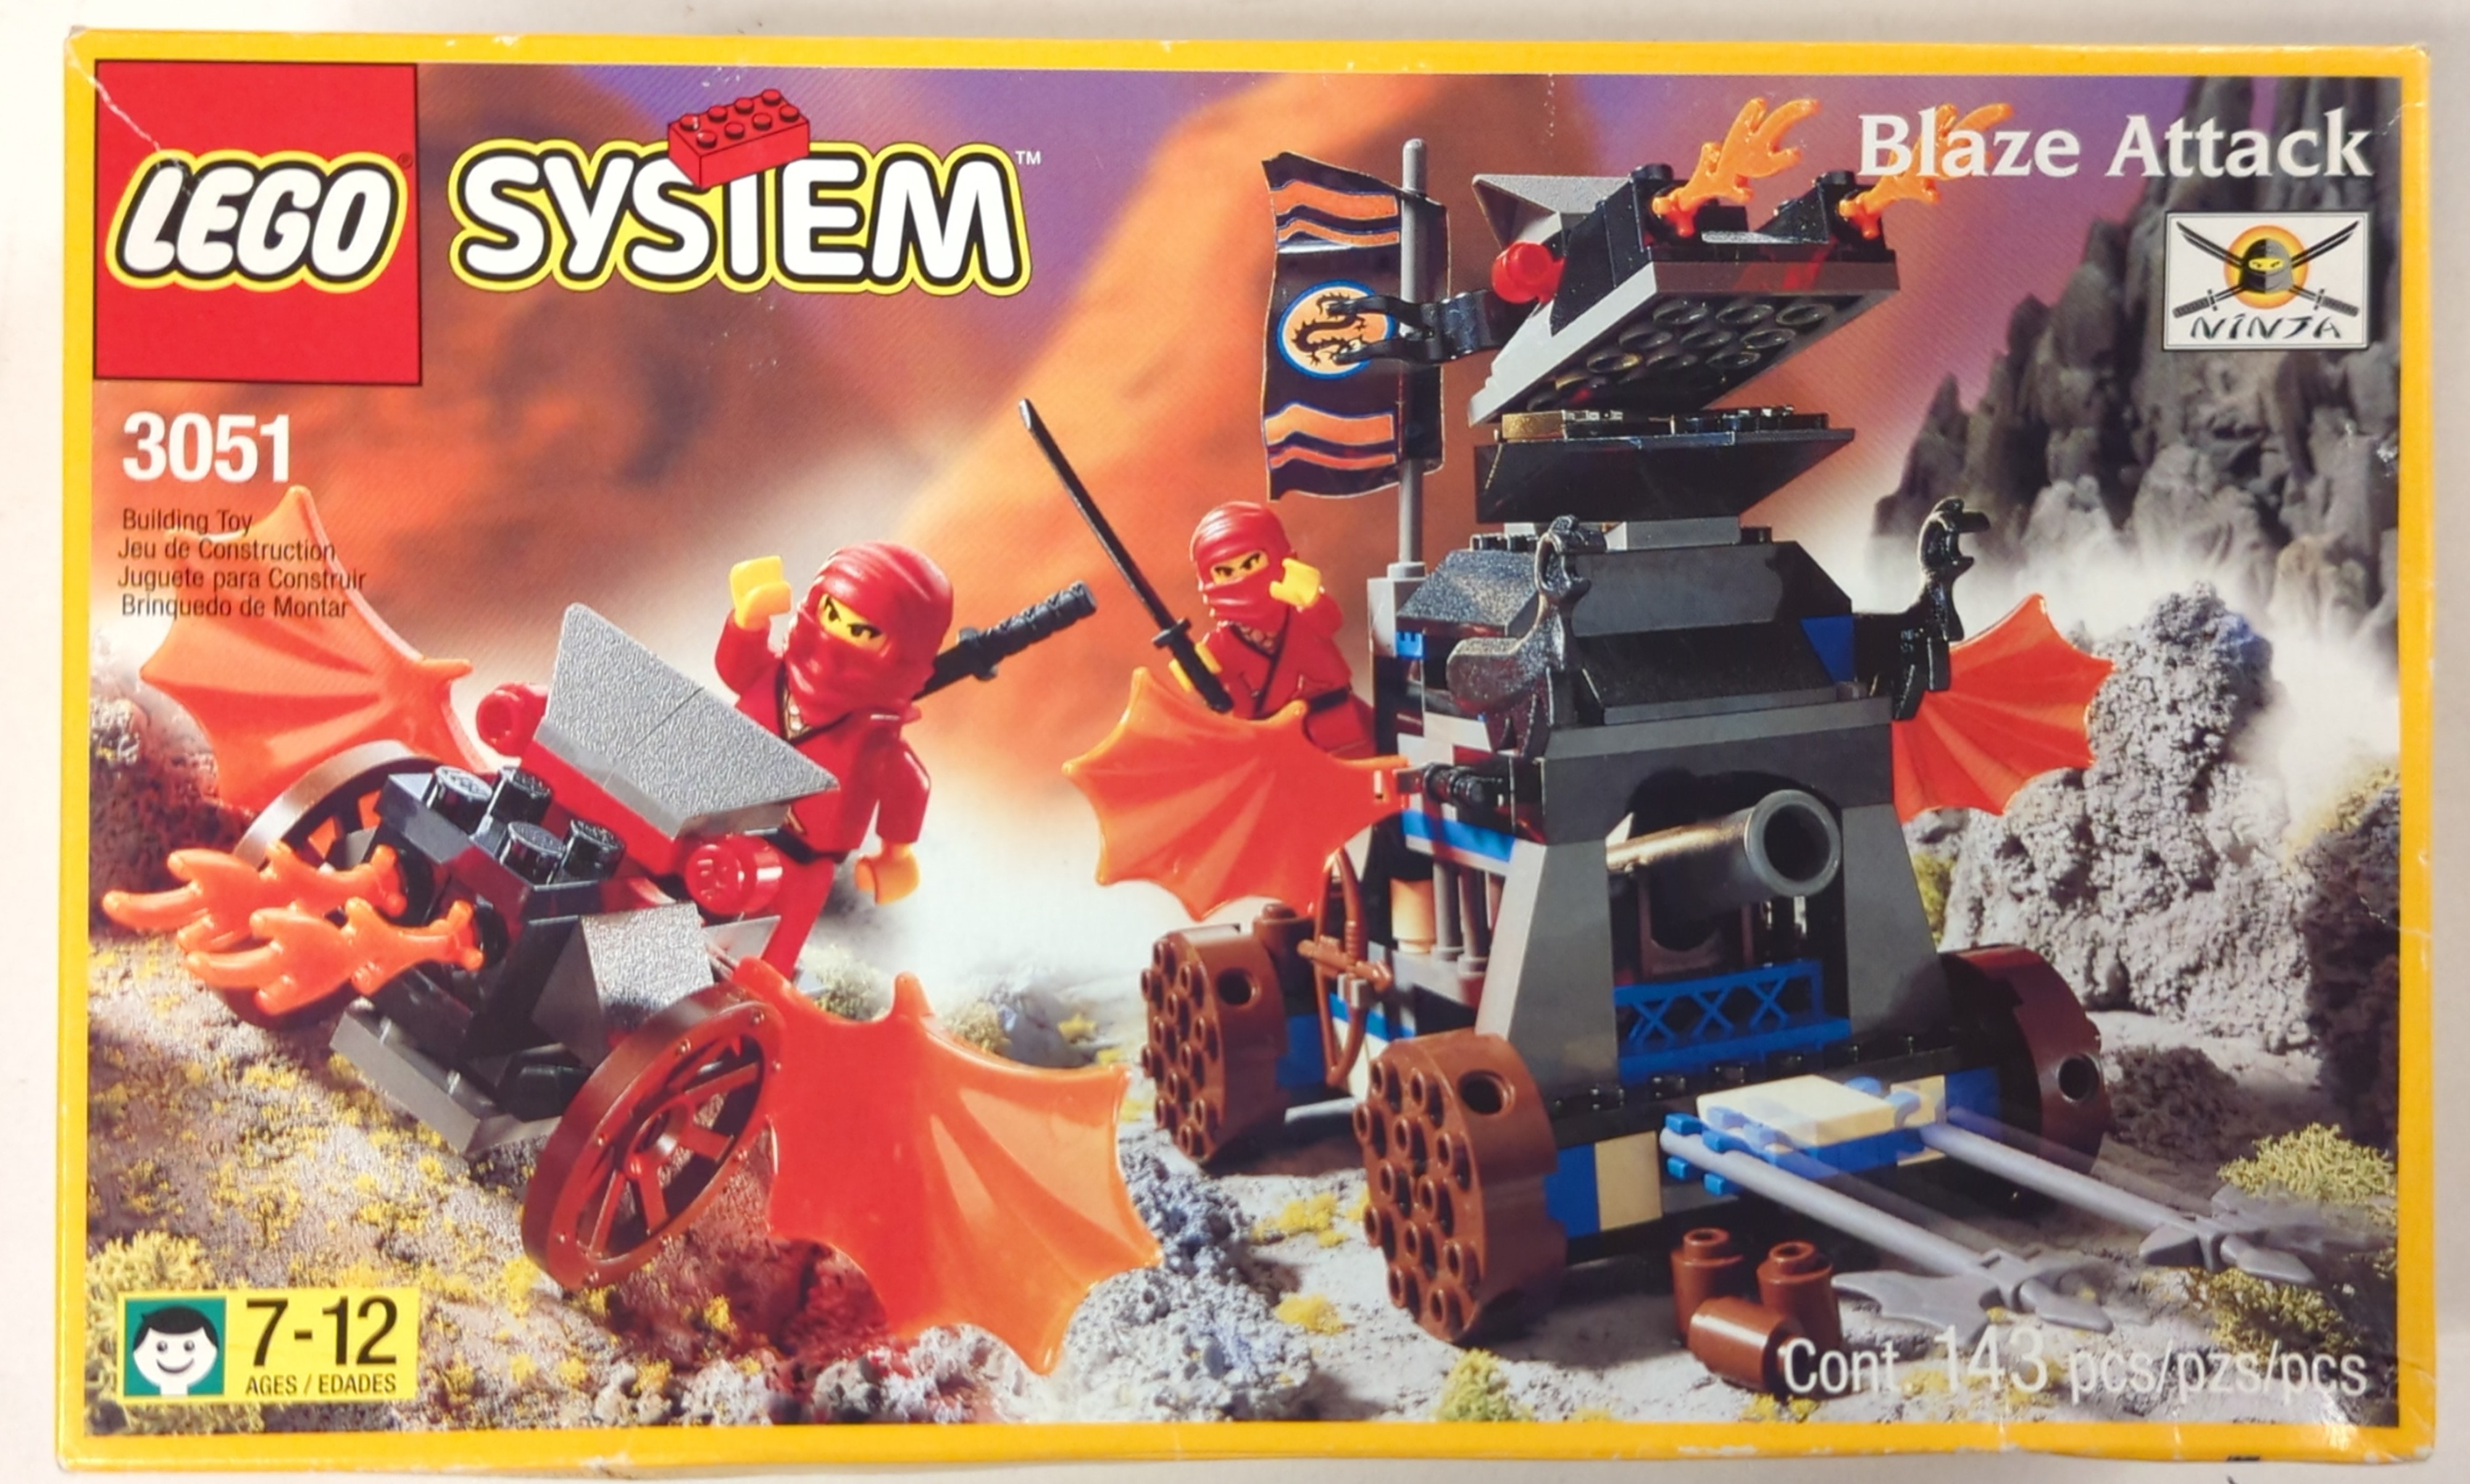 LEGO SYSTEM/お城シリーズ BLAZE ATTACK/赤ニンジャのドラゴンカート